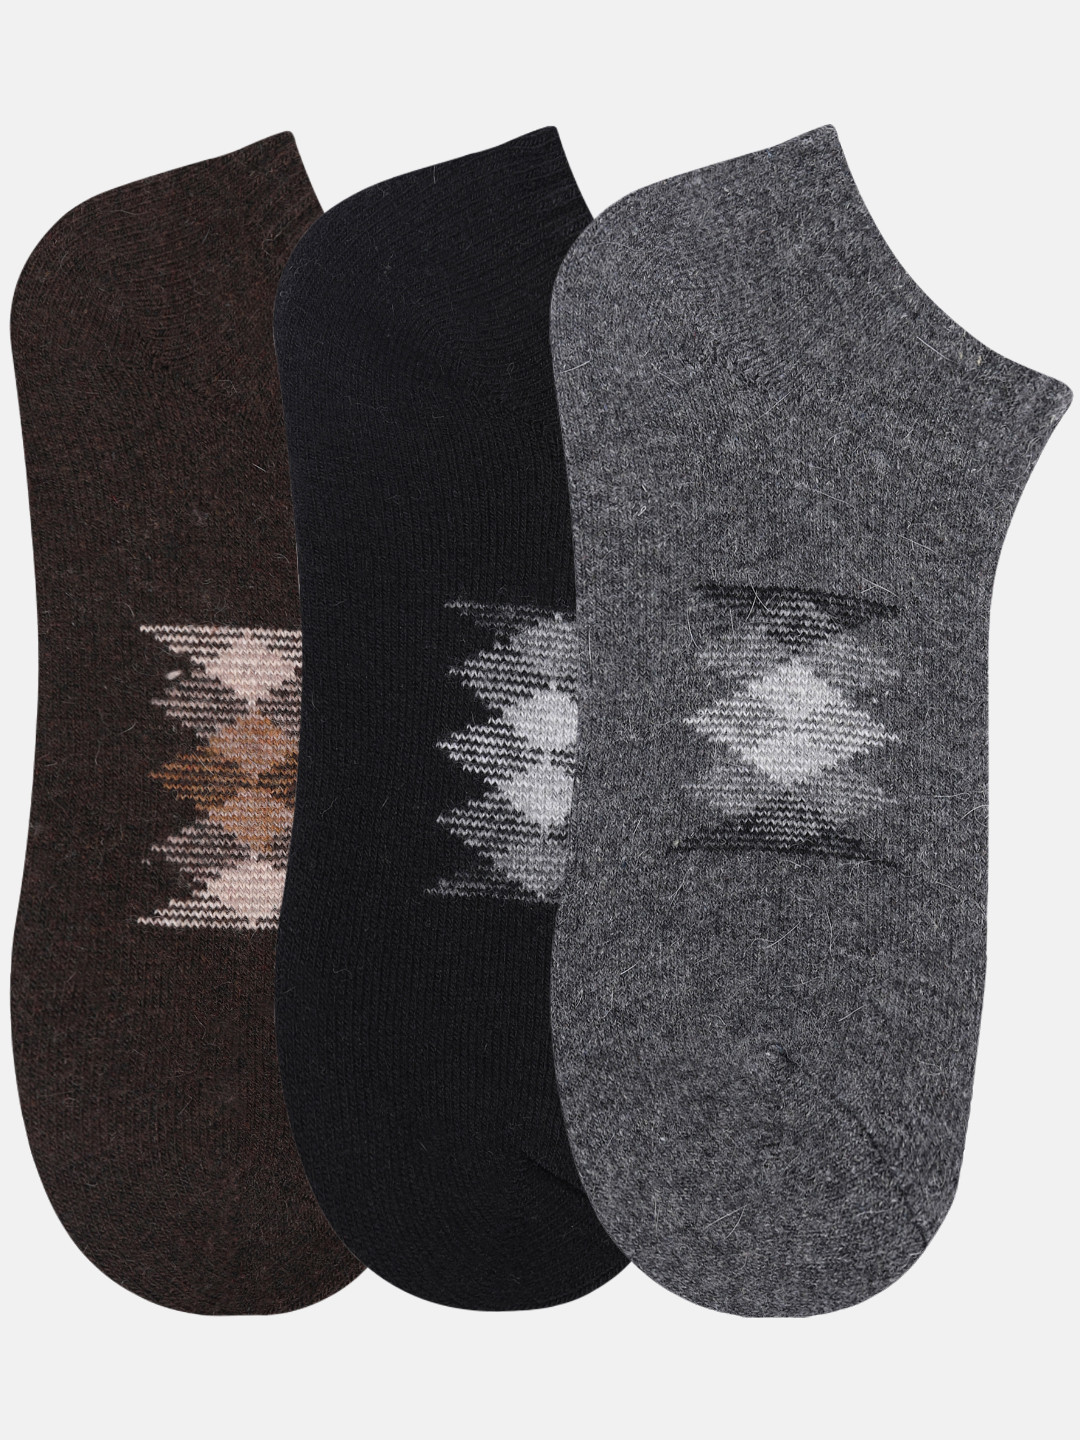 NEXT2SKIN Men Woolen Loafer Socks (Pack of 3) (Brown,Black,Dark Grey) 5929-BRBDG